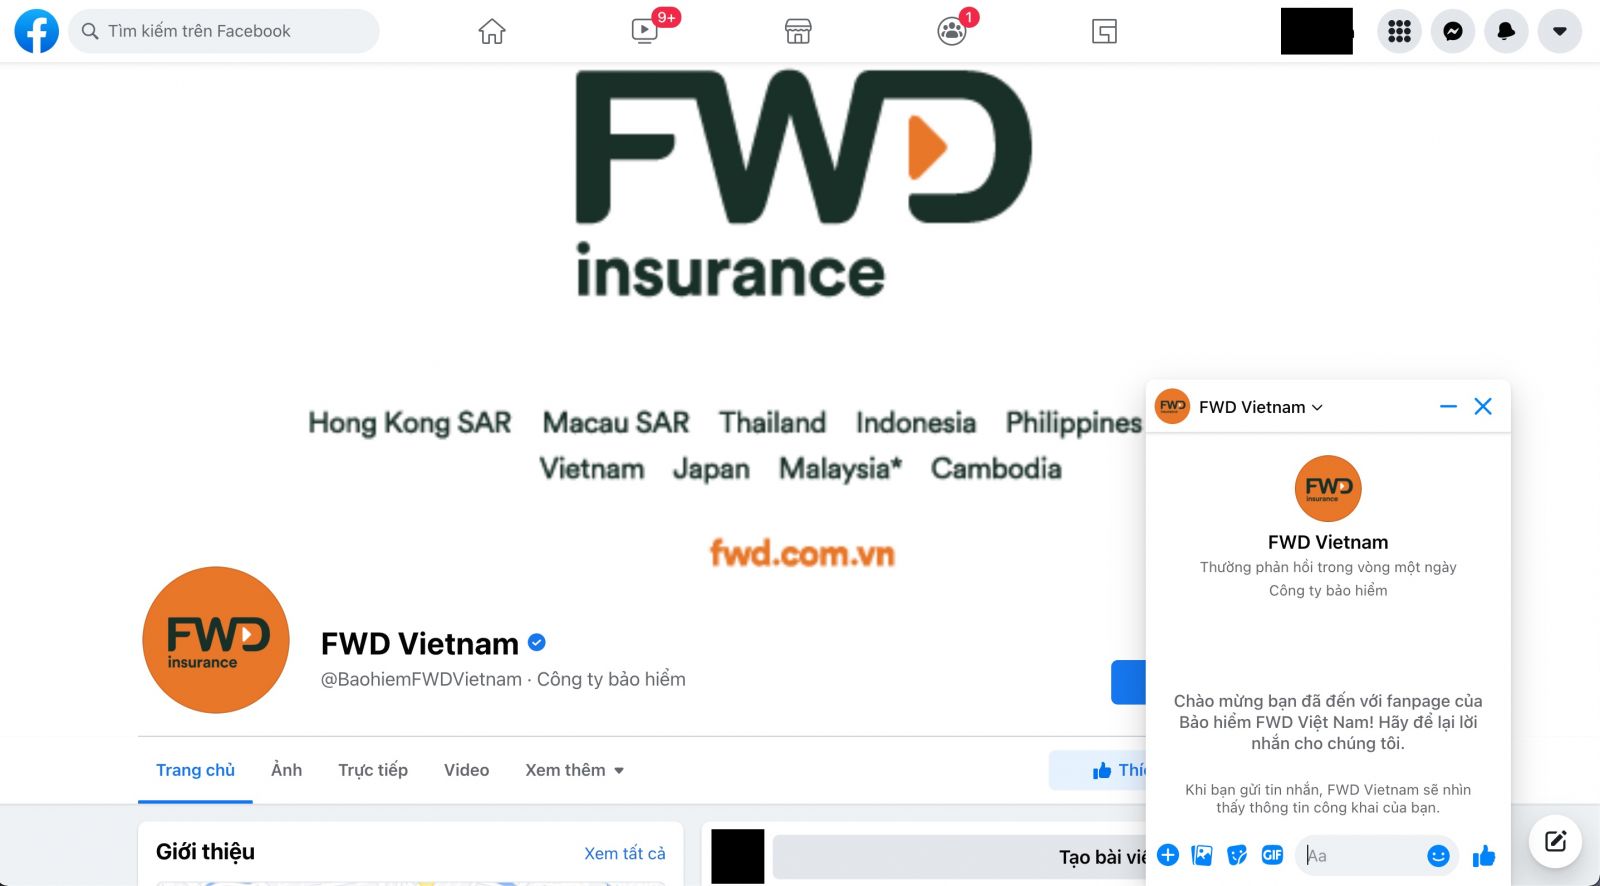 Liên hệ qua livechat bảo hiểm FWD Vietnam